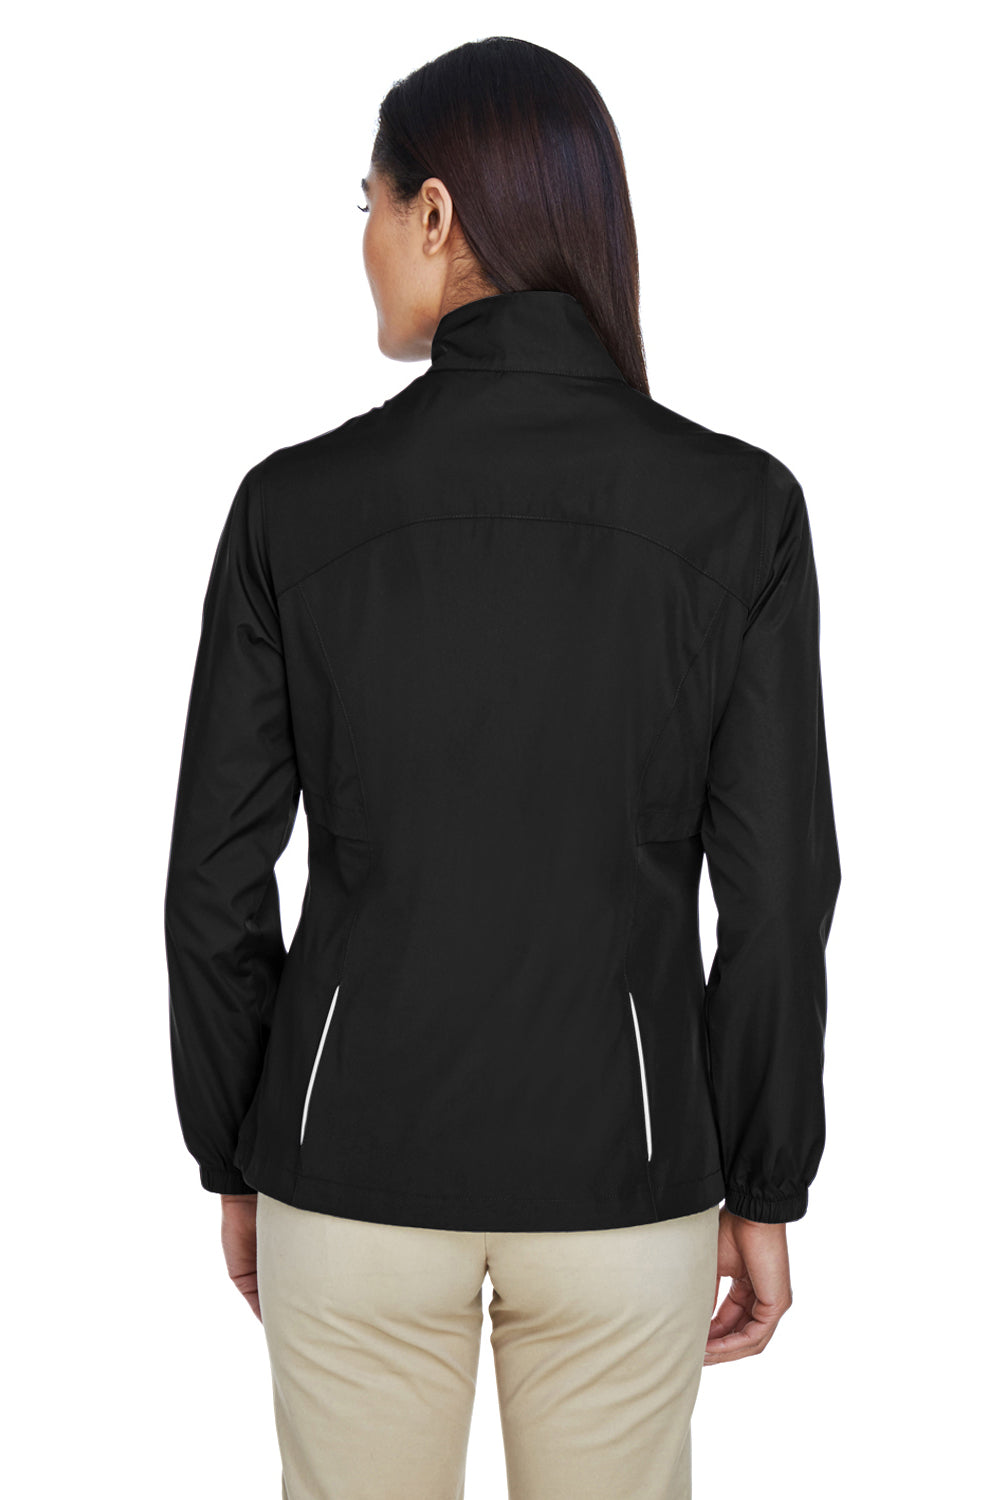 Core 365 78183 Womens Motivate Water Resistant Full Zip Jacket Black Back